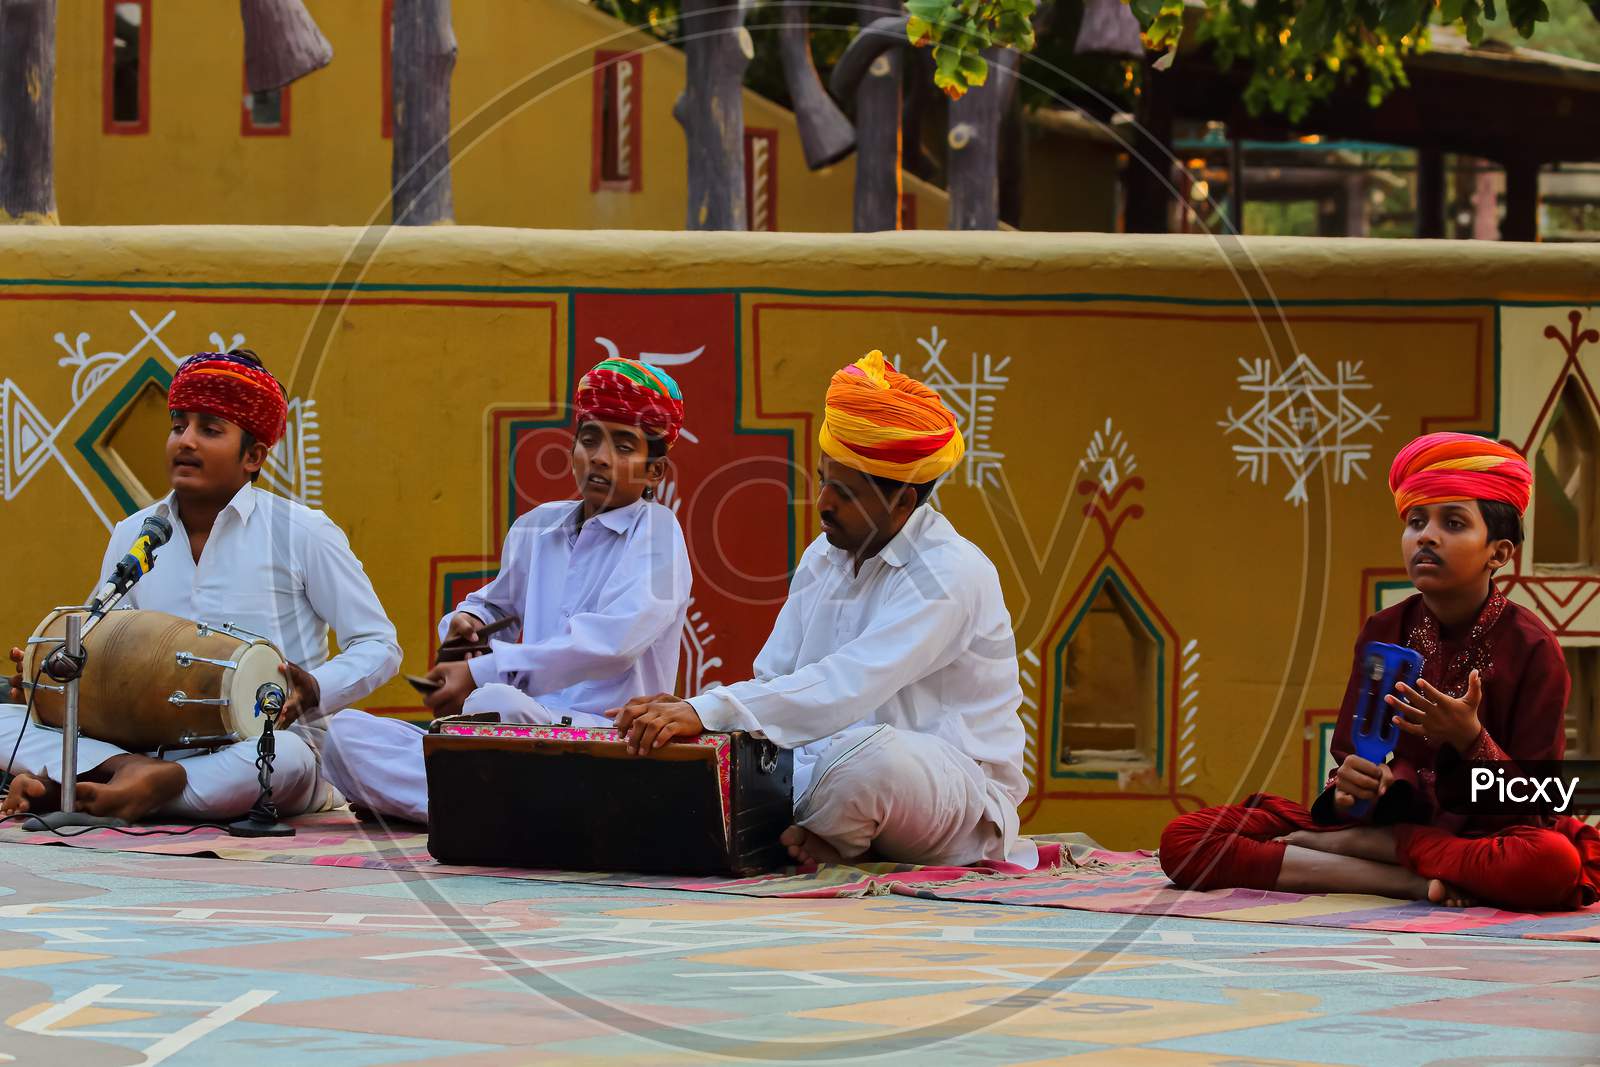 Rajasthani men dressed in traditional attire playing folk music